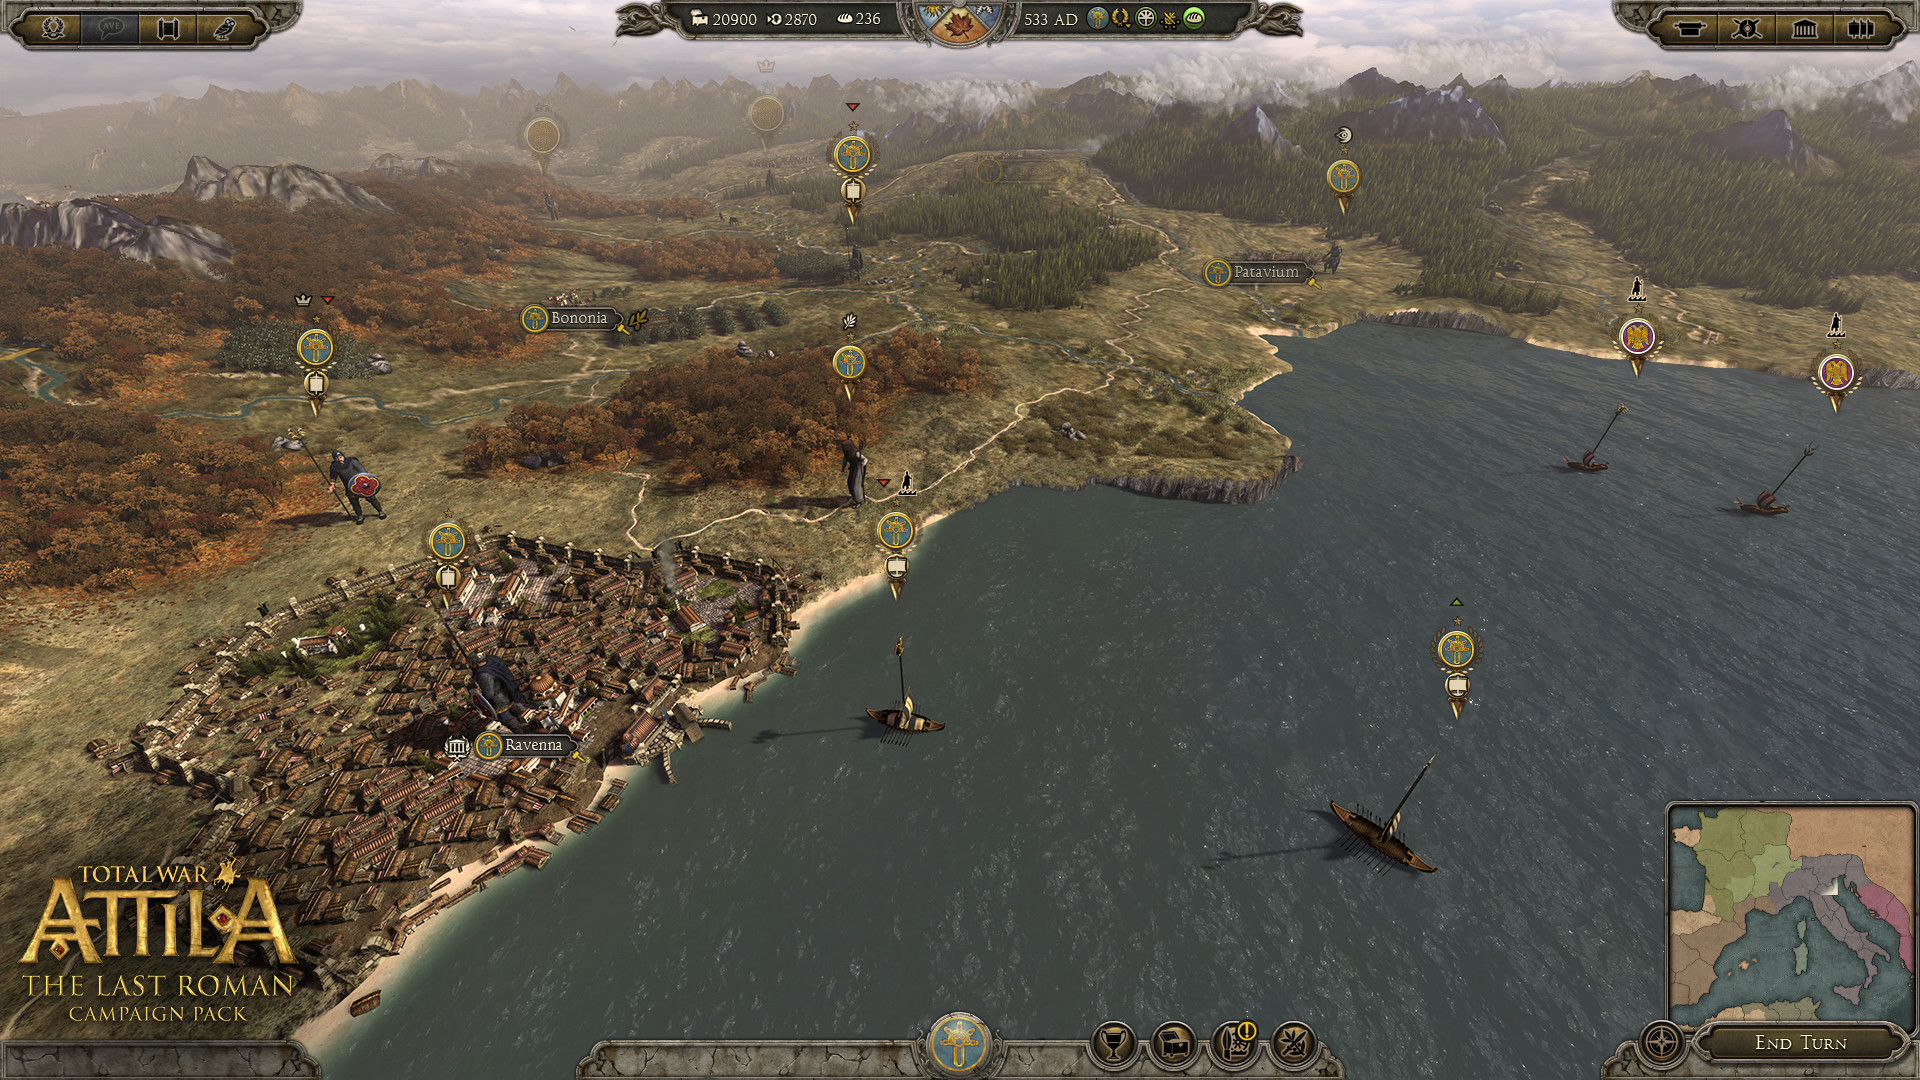 Total War: ATTILA - The Last Roman Campaign Pack on Steam